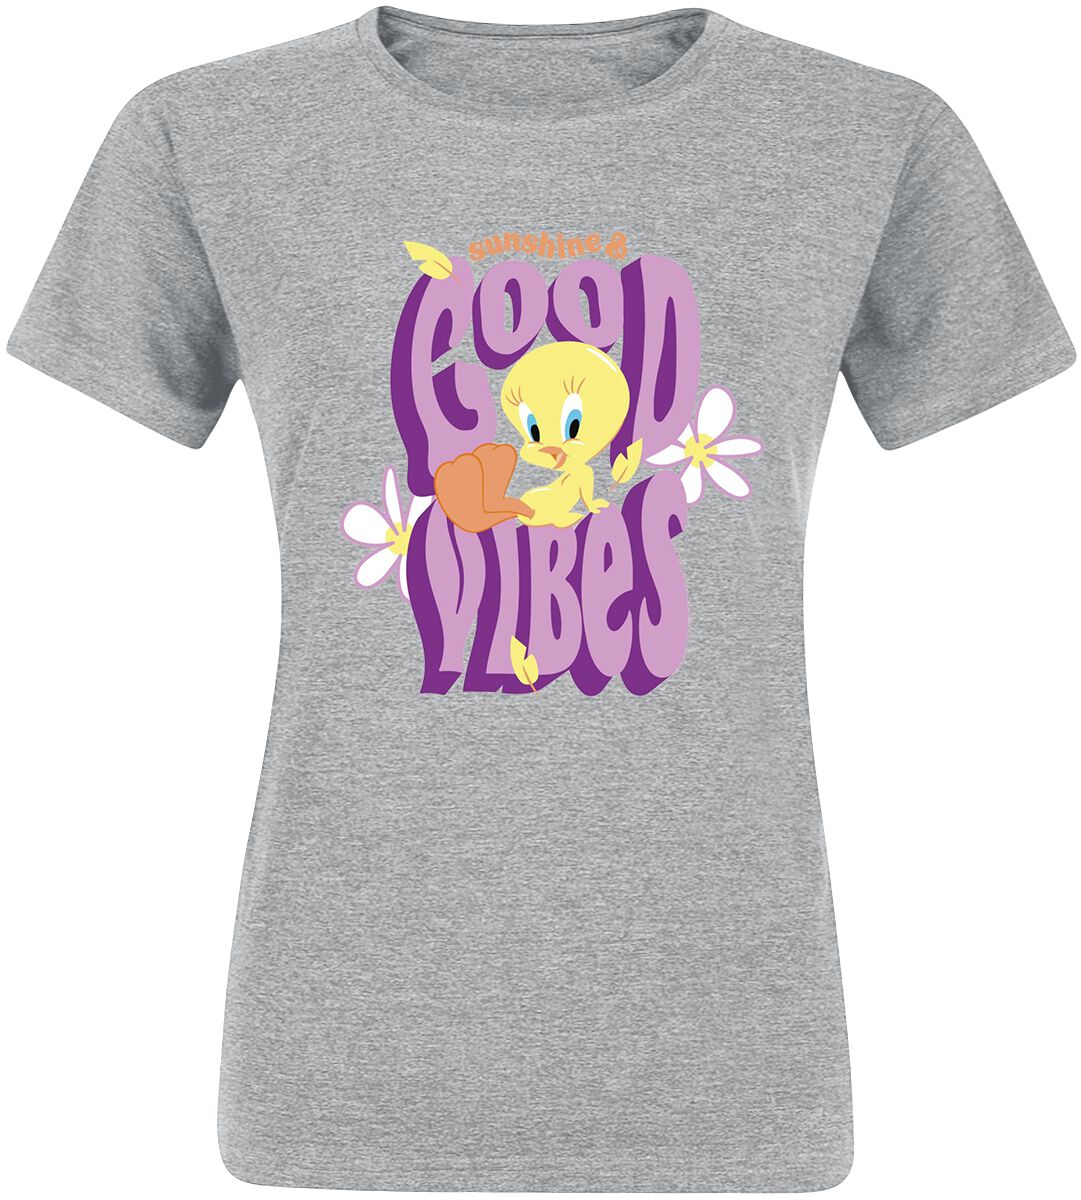 Looney Tunes Sunshine & Good Vibes T-Shirt grey